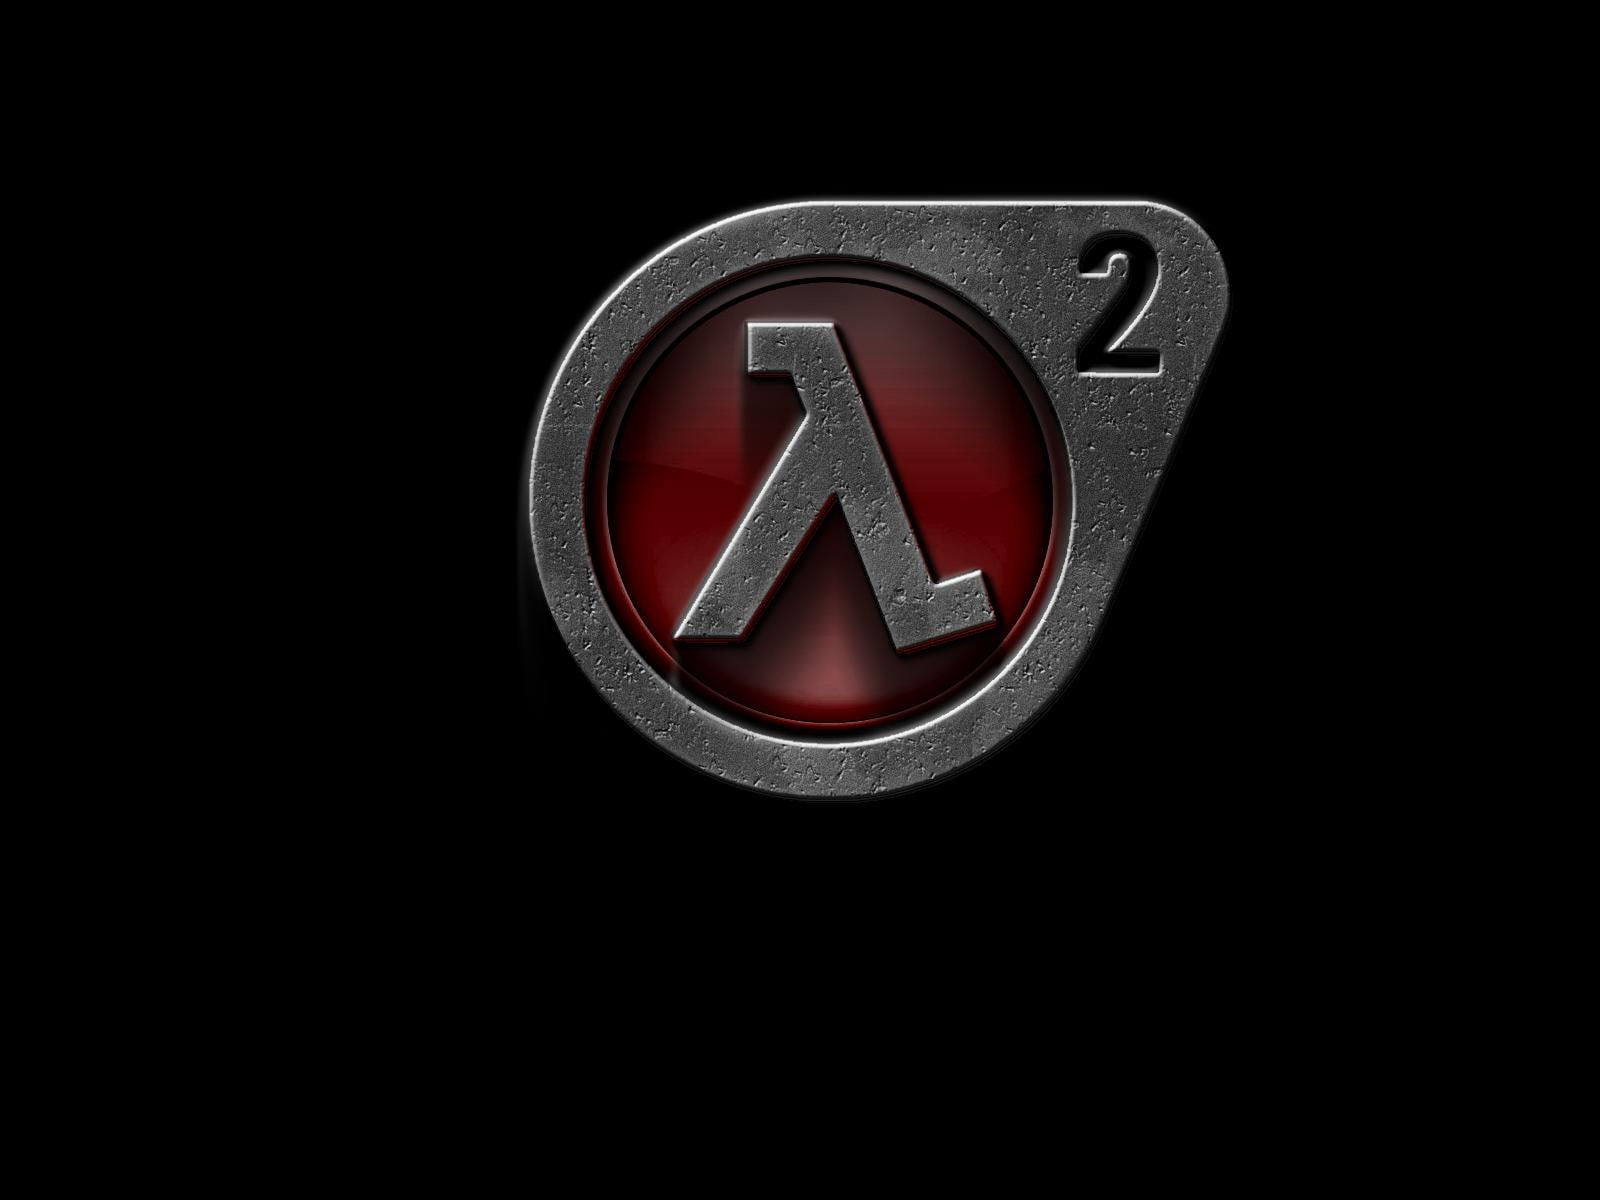 gray and red logo, half-life 2, lambda (λ), black background